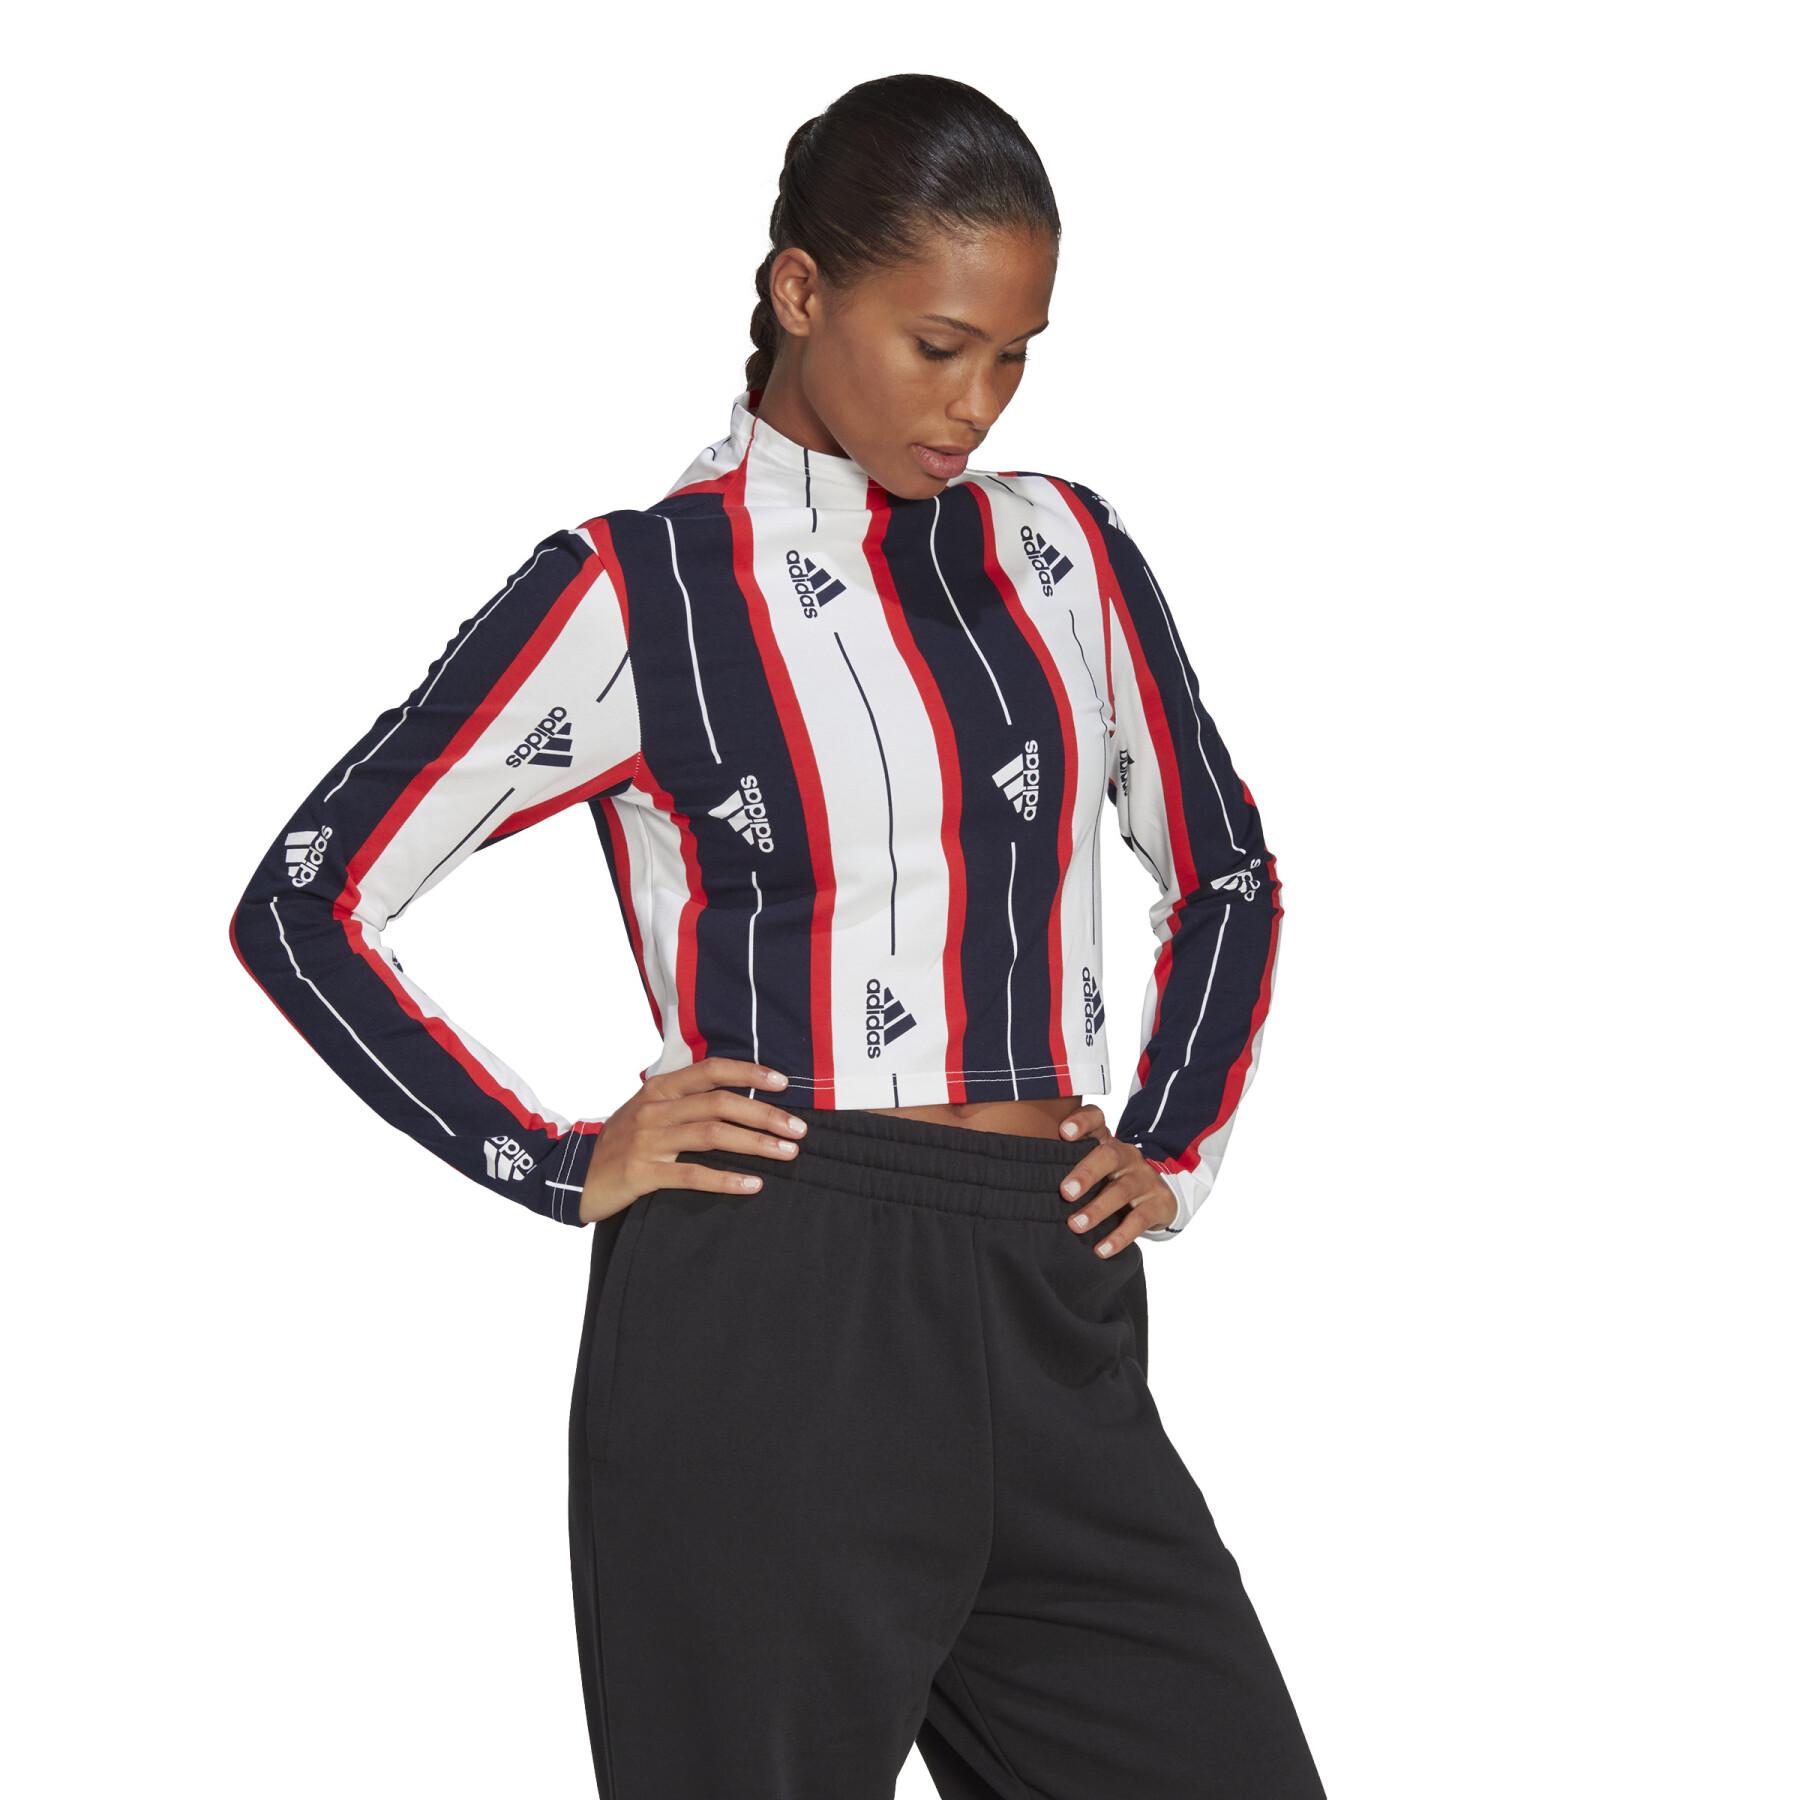 Women's fine stripes printed T-shirt adidas Essentials